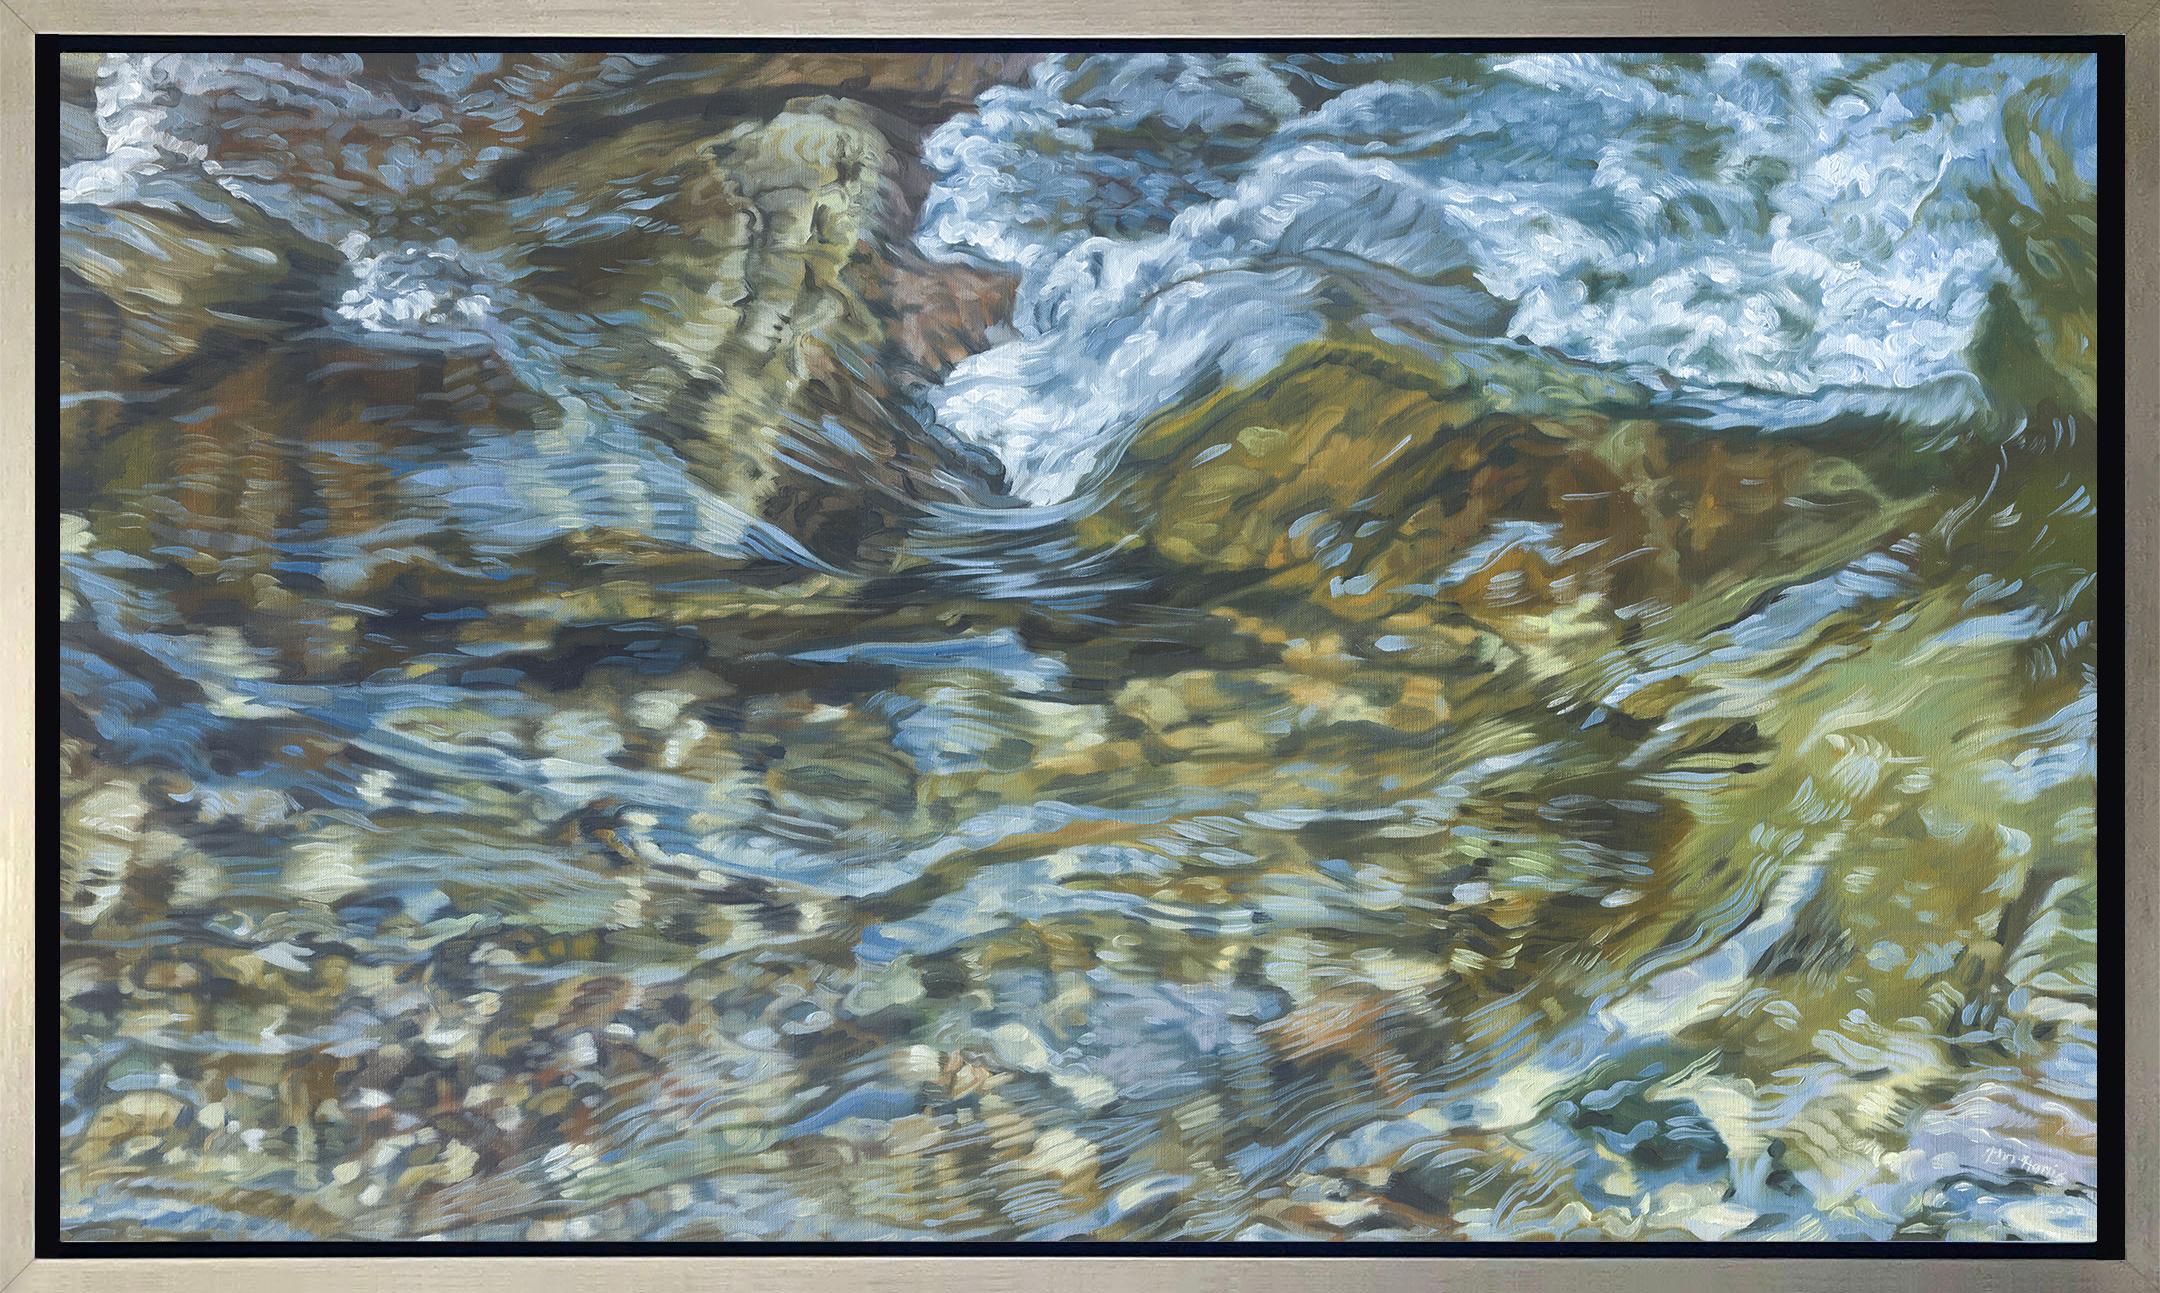 John Harris (painter) Landscape Print - "Streambed III, " Framed Limited Edition Giclee Print, 48" x 80"